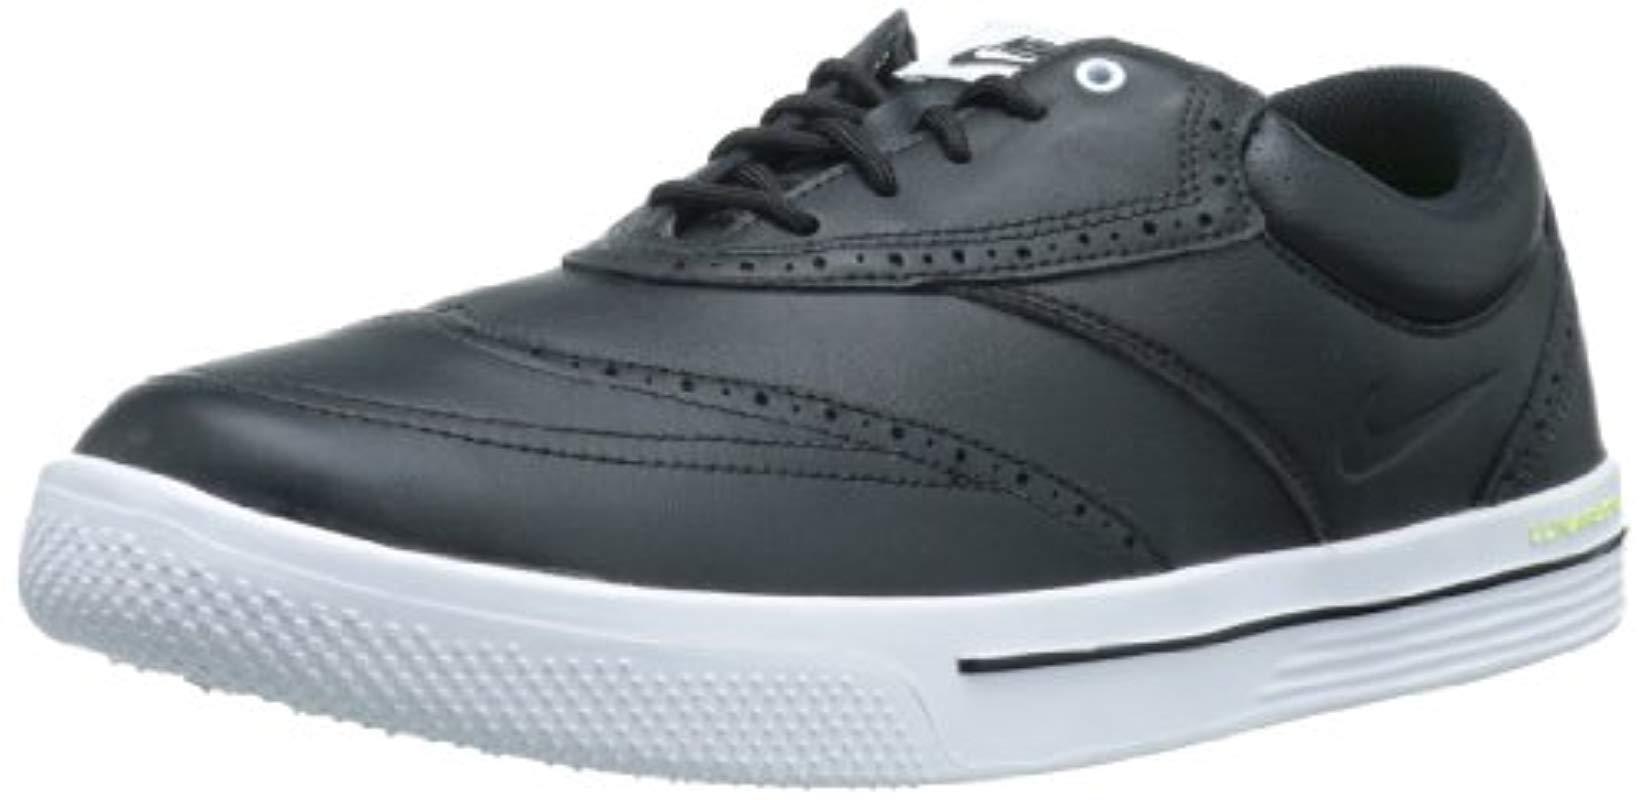 Nike Lunar Swingtip Leather Golf Shoes 